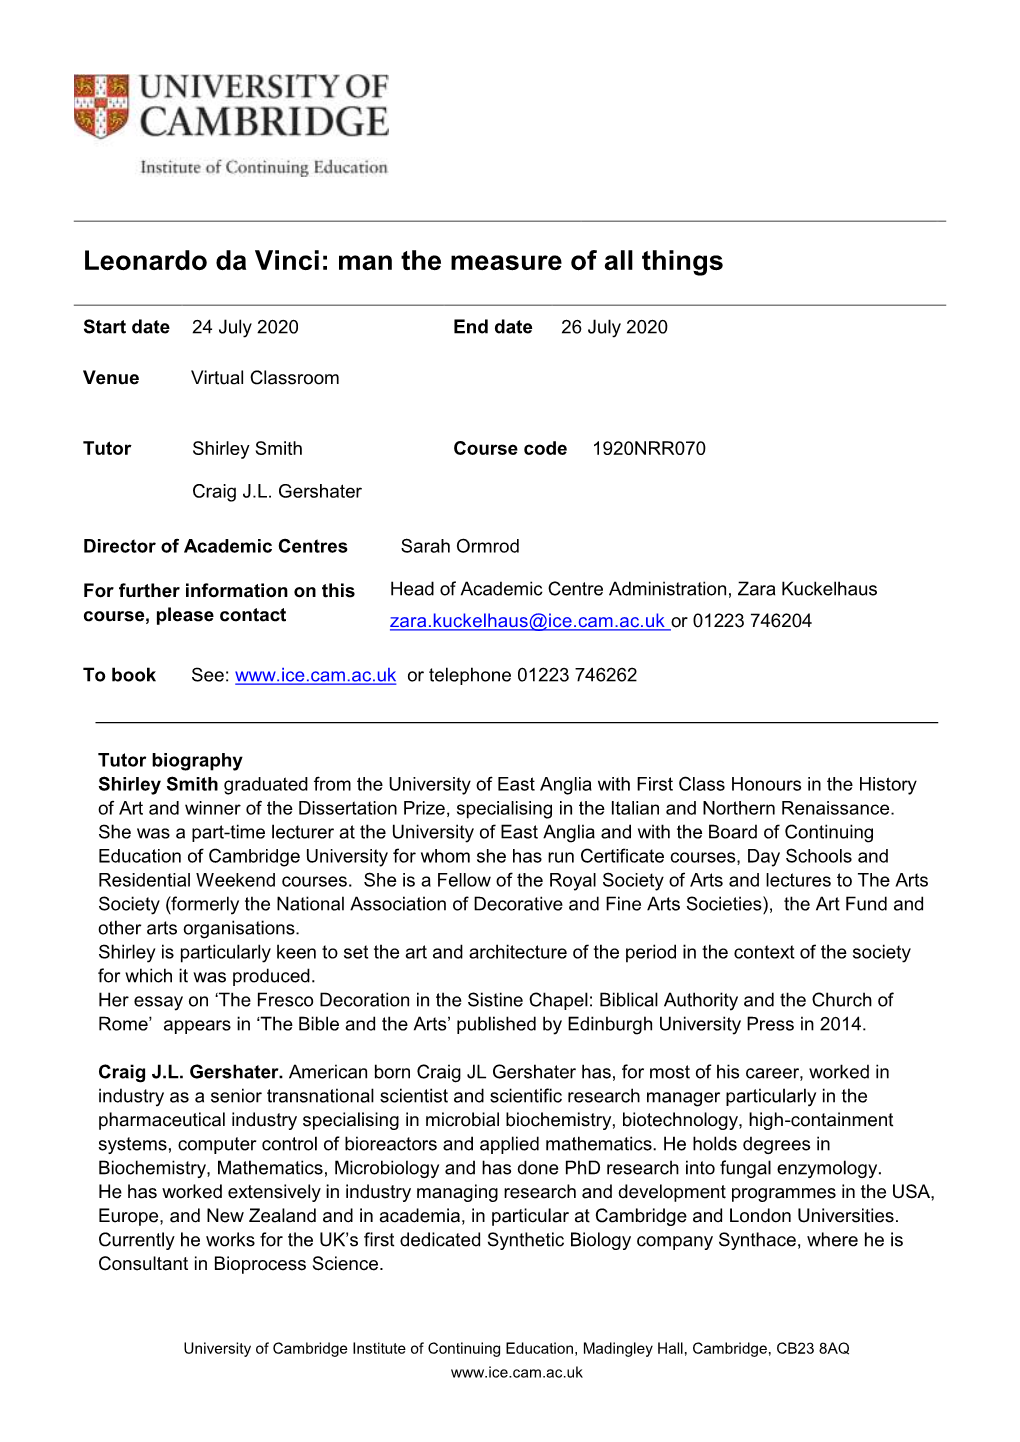 Leonardo Da Vinci: Man the Measure of All Things